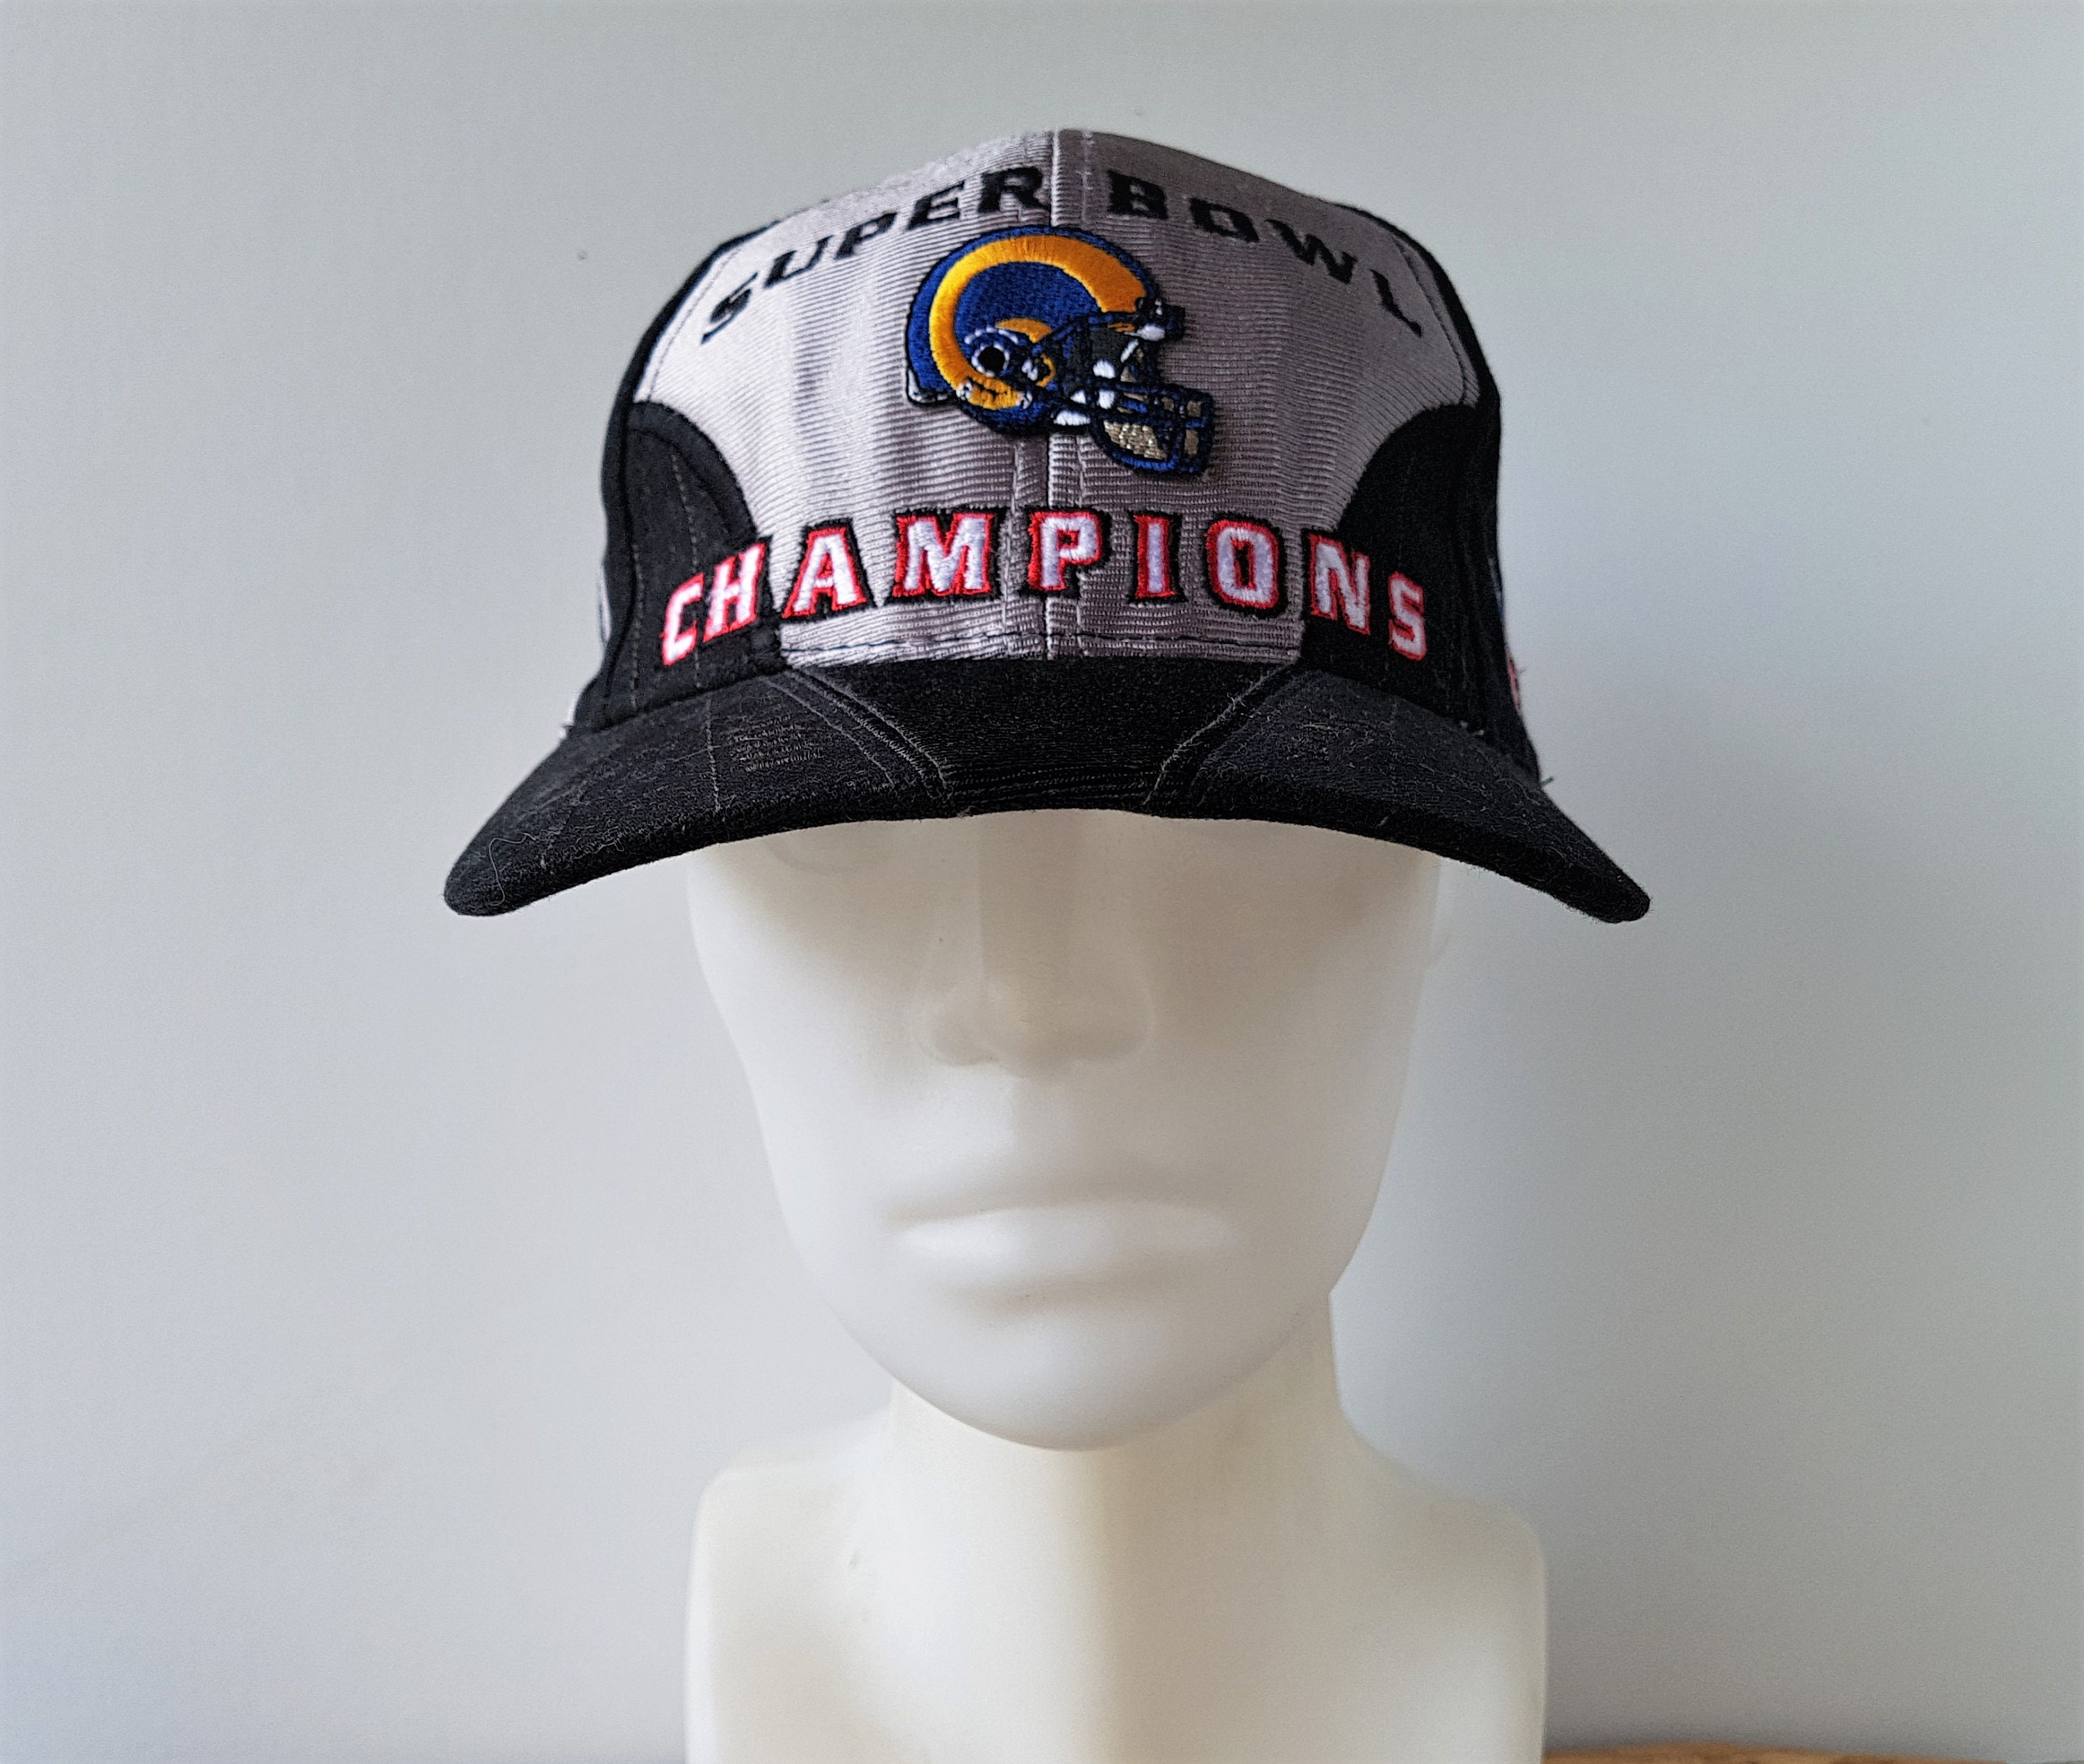 St. Louis Rams Super Bowl Champions Graphic Hat